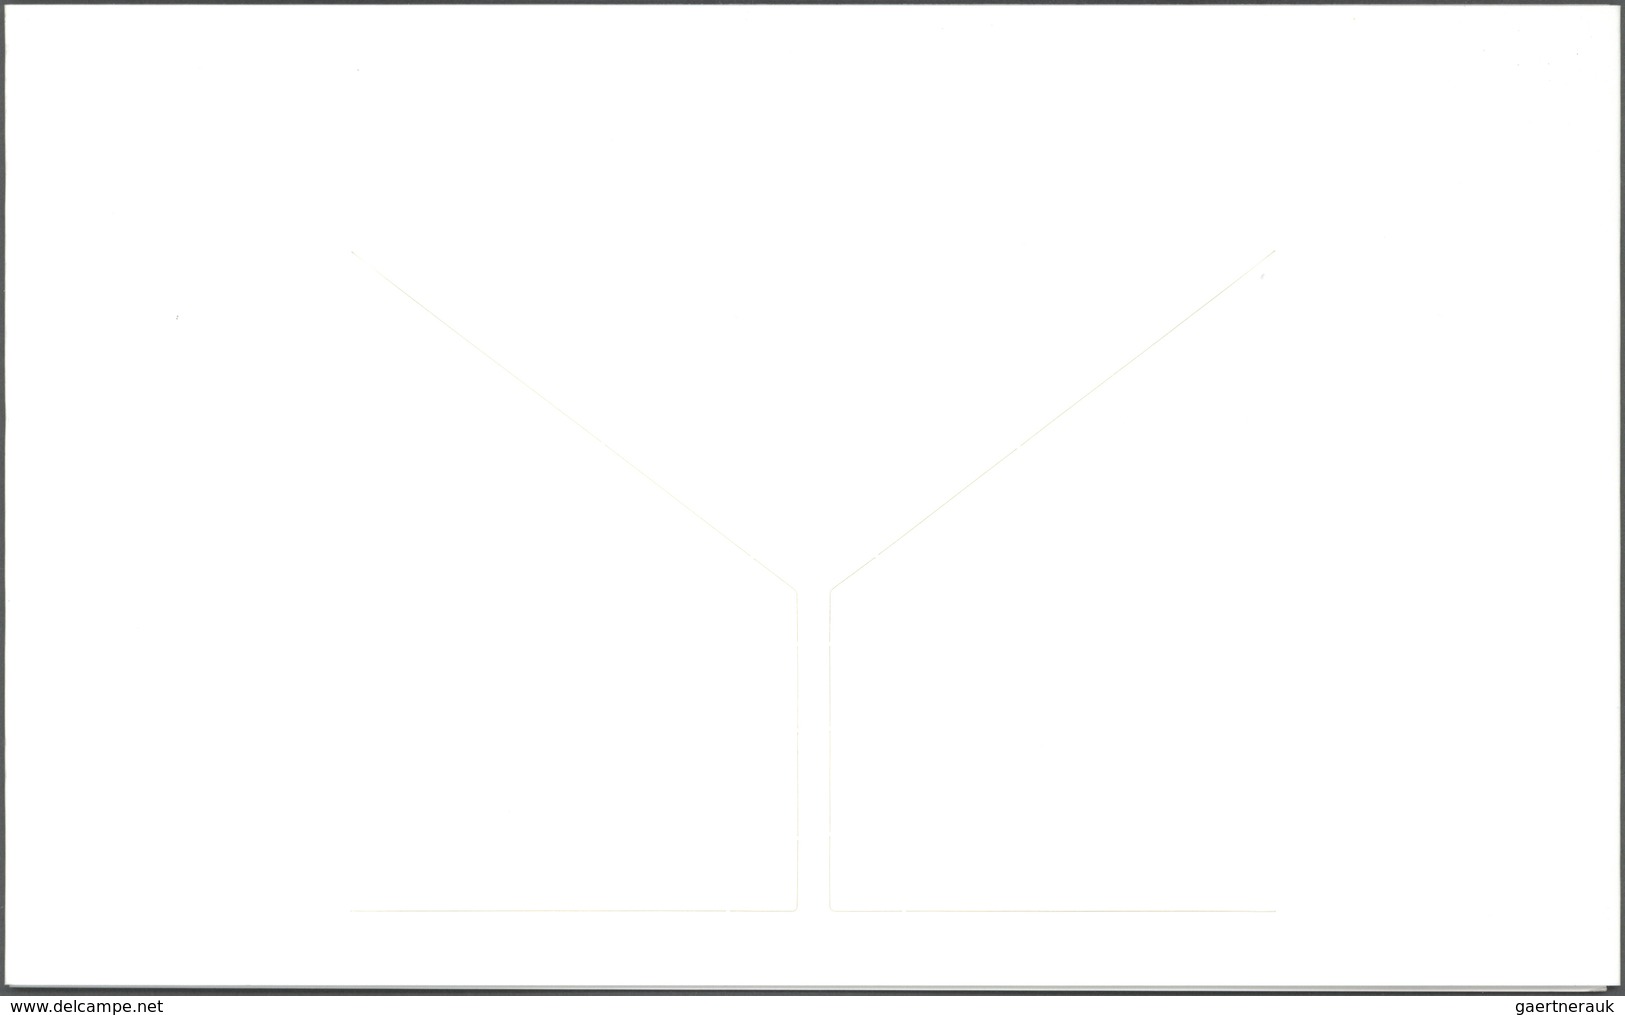 02654 Testbanknoten: Beautiful Test Note OEBS Austria Featuring "Gustav Klimt", Intaglio Printed On Real B - Specimen